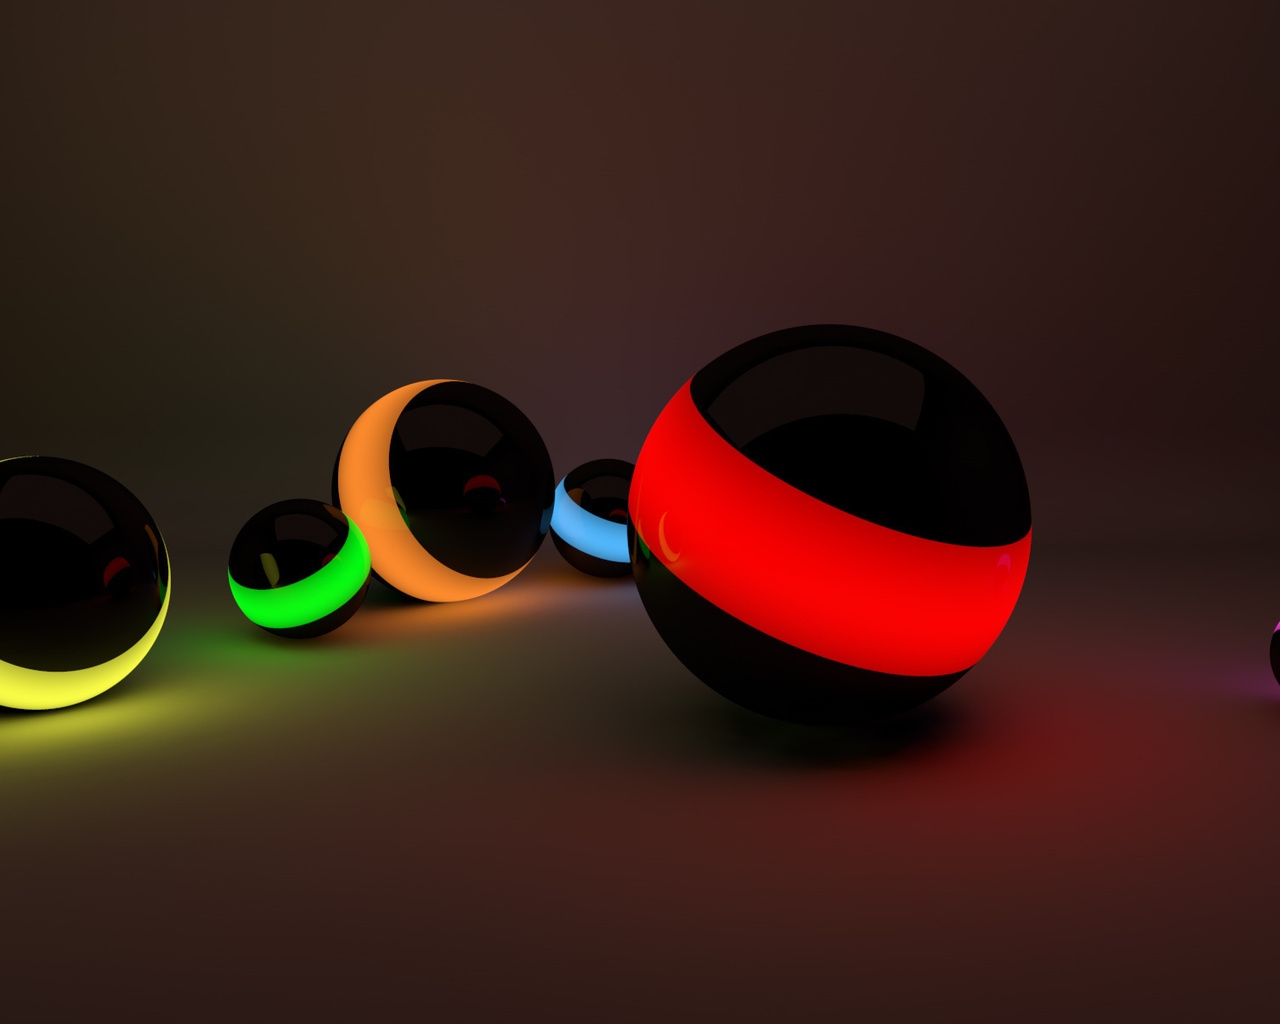 Balls Lights for 1280 x 1024 resolution